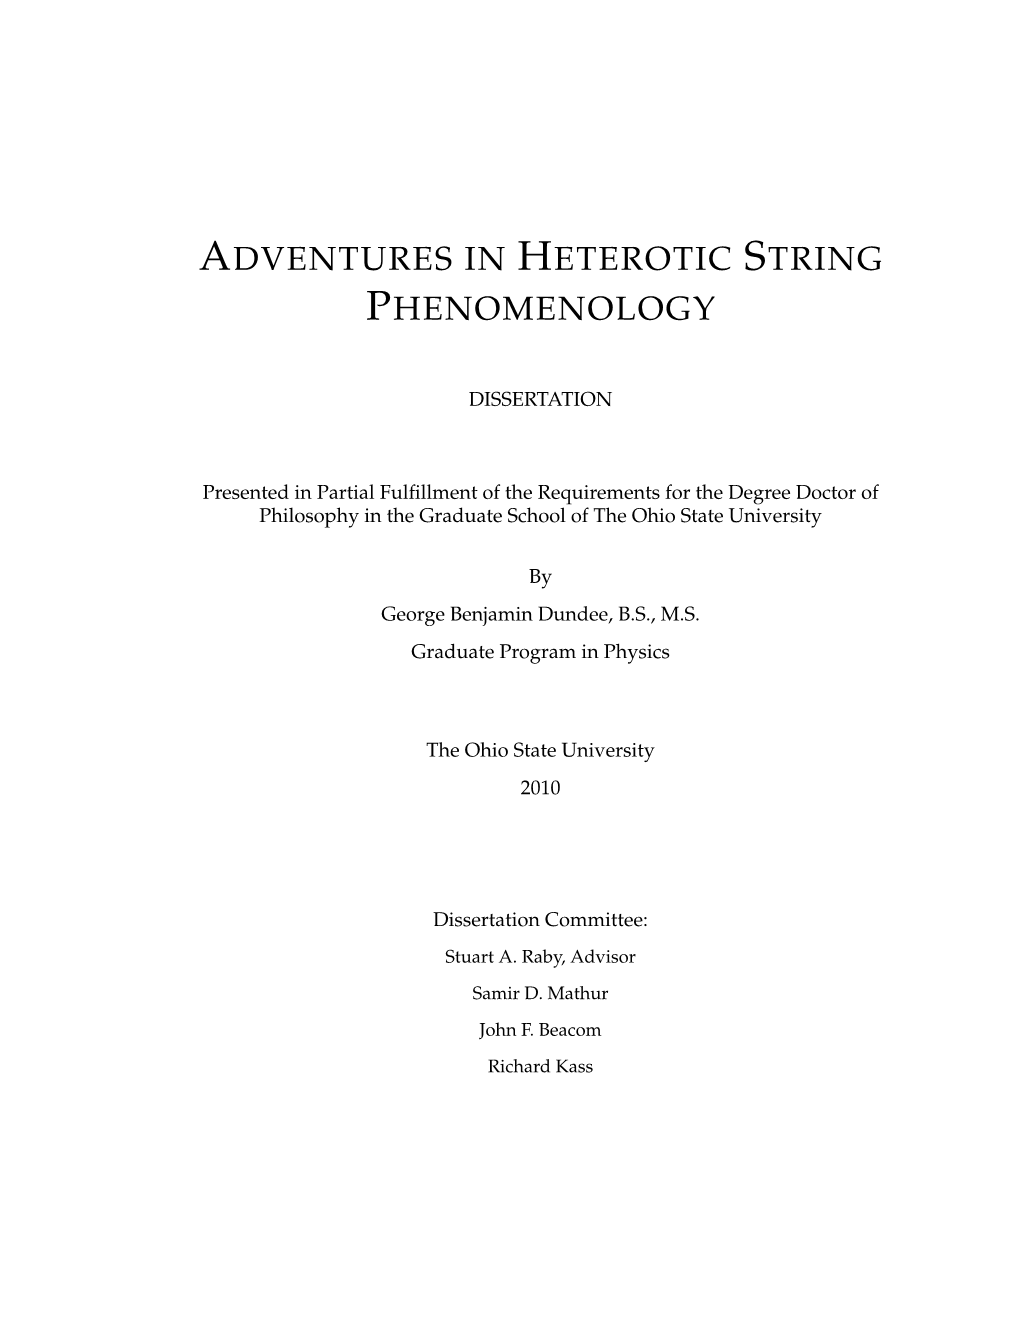 Adventures in Heterotic String Phenomenology